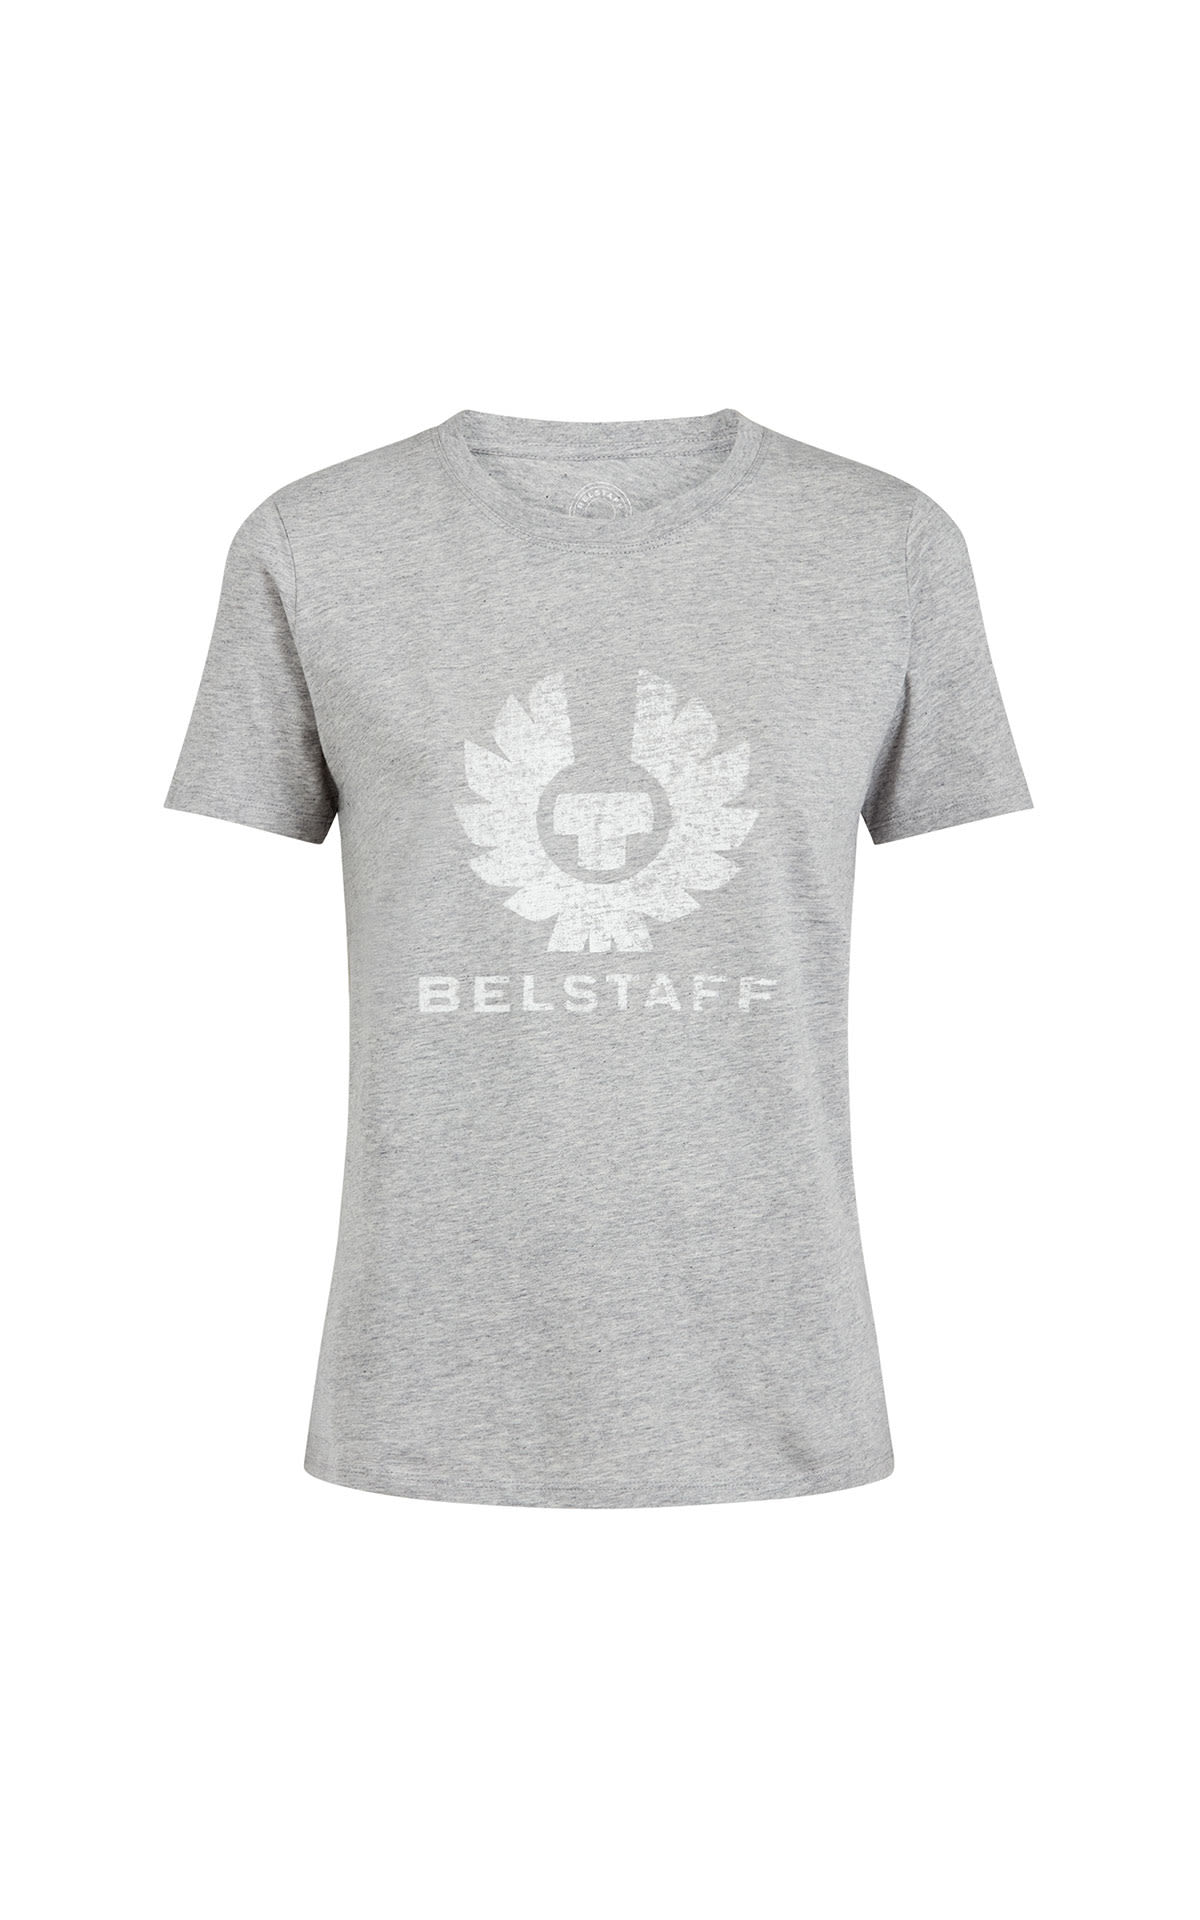 Belstaff Mariola phoenix t-shirt grey from Bicester Village